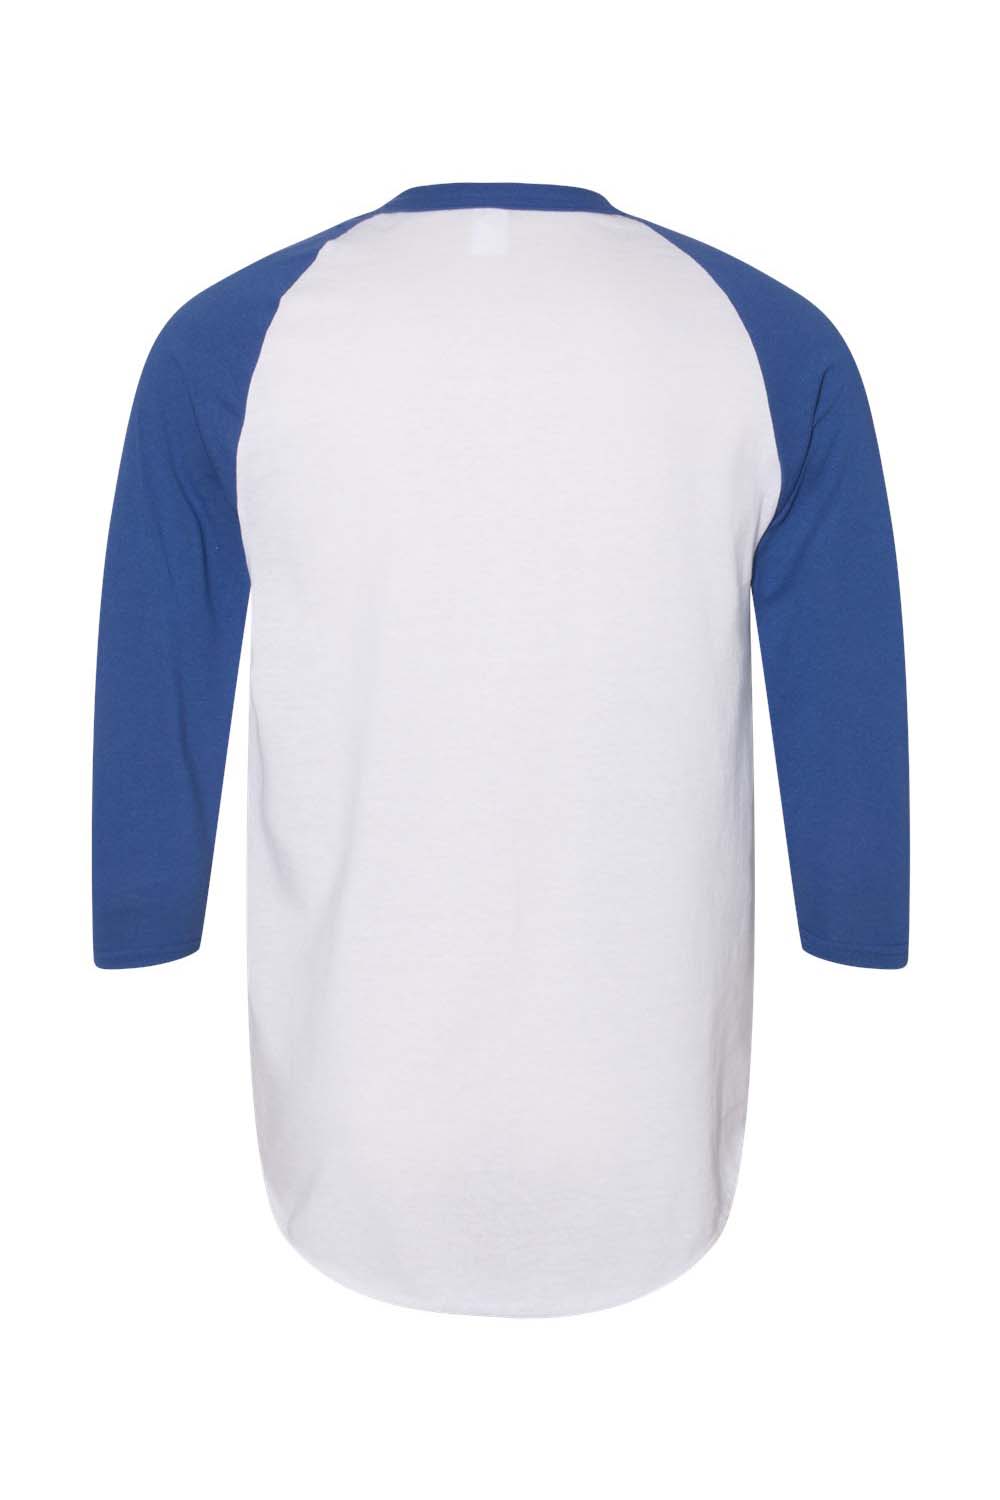 Augusta Sportswear AG4420/4420 Mens 3/4 Sleeve Crewneck T-Shirt White/Royal Blue Model Flat Back